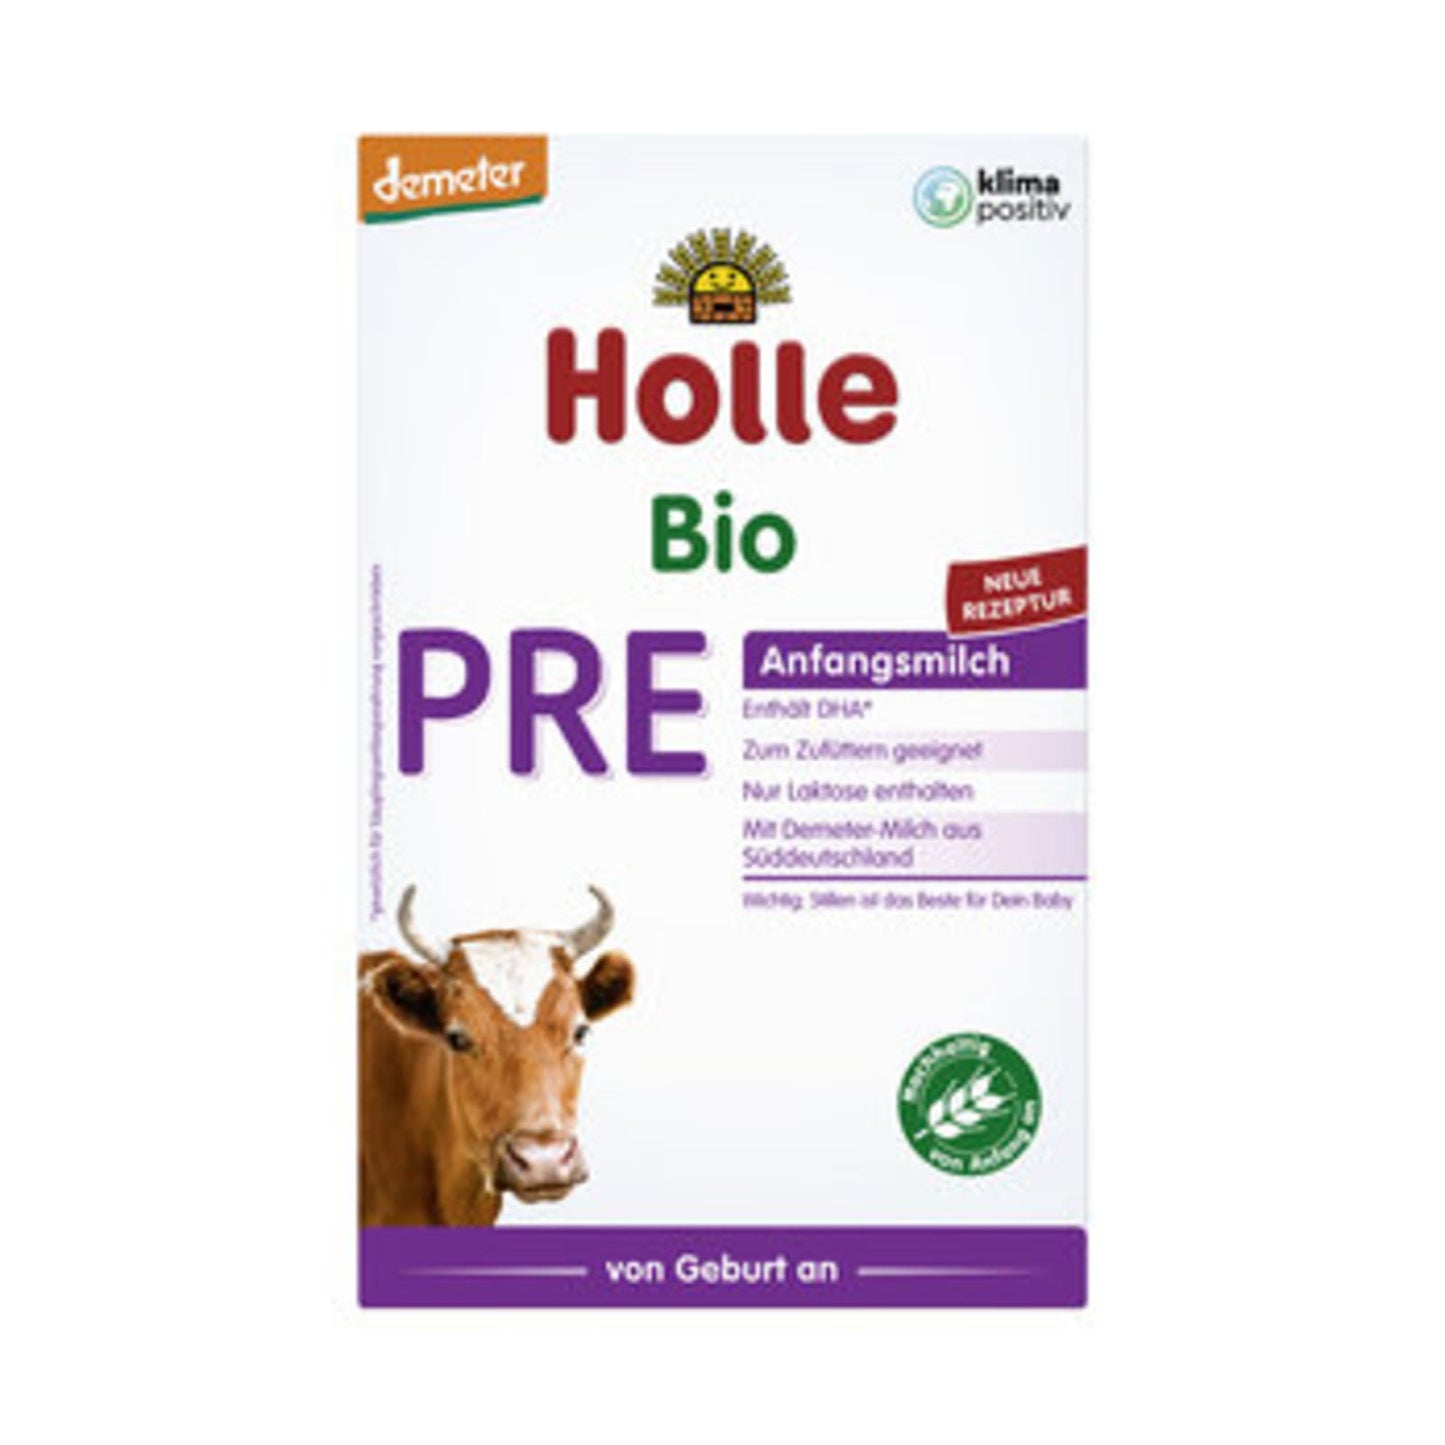 Holle Cow Organic Milk